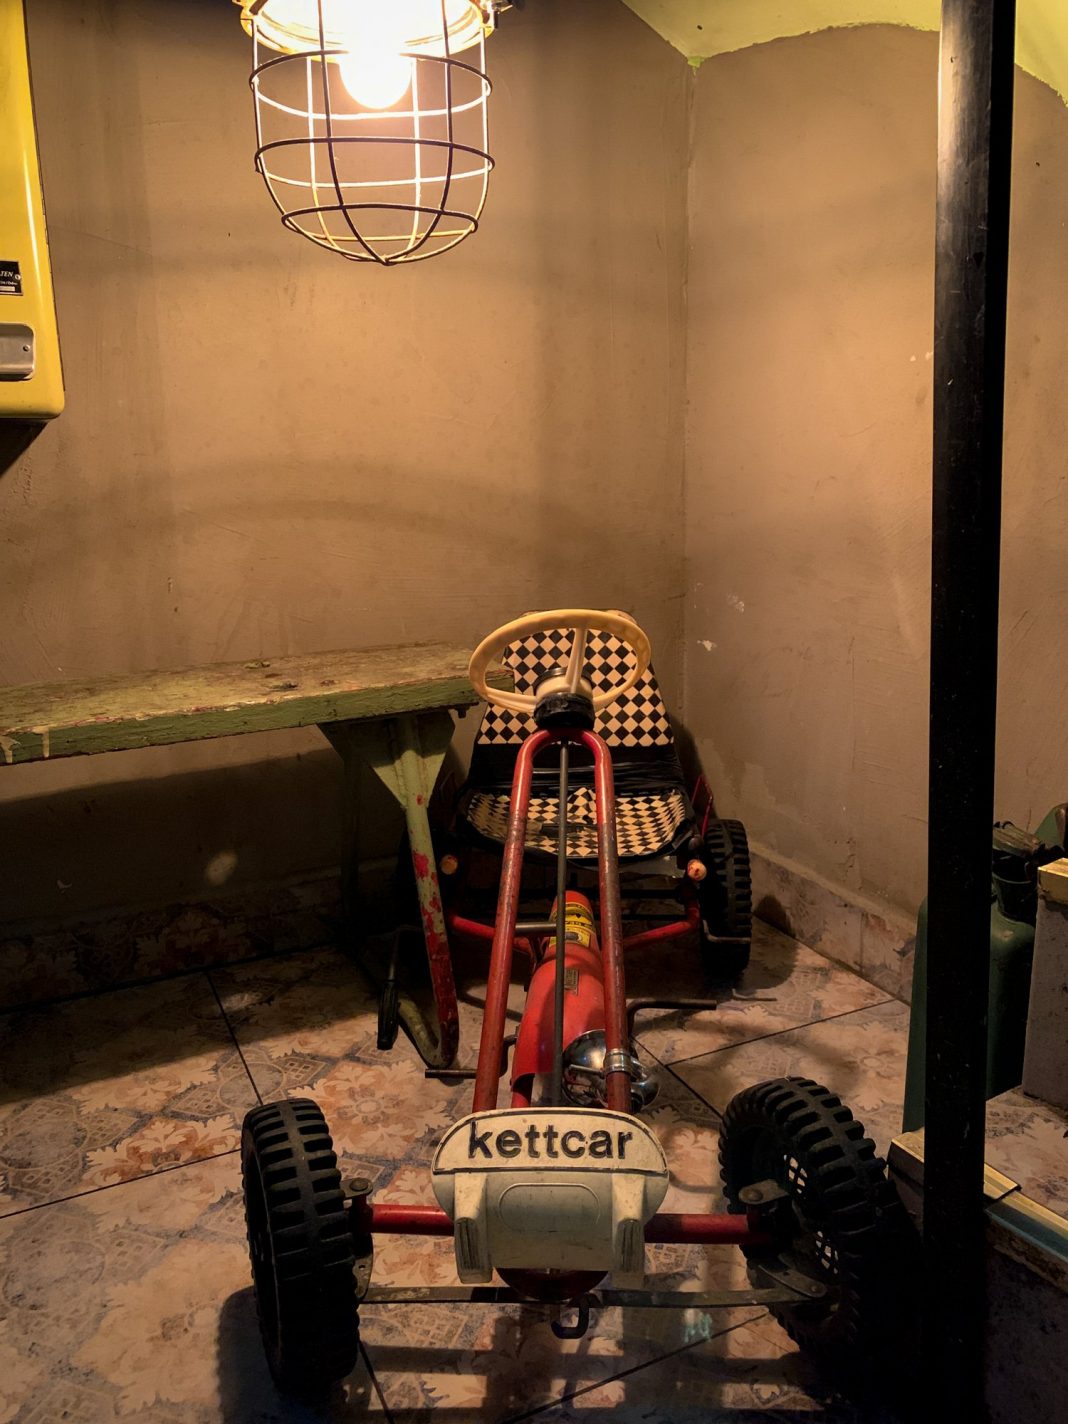 Foto: Kettcar im Keller vom Herr Pimock